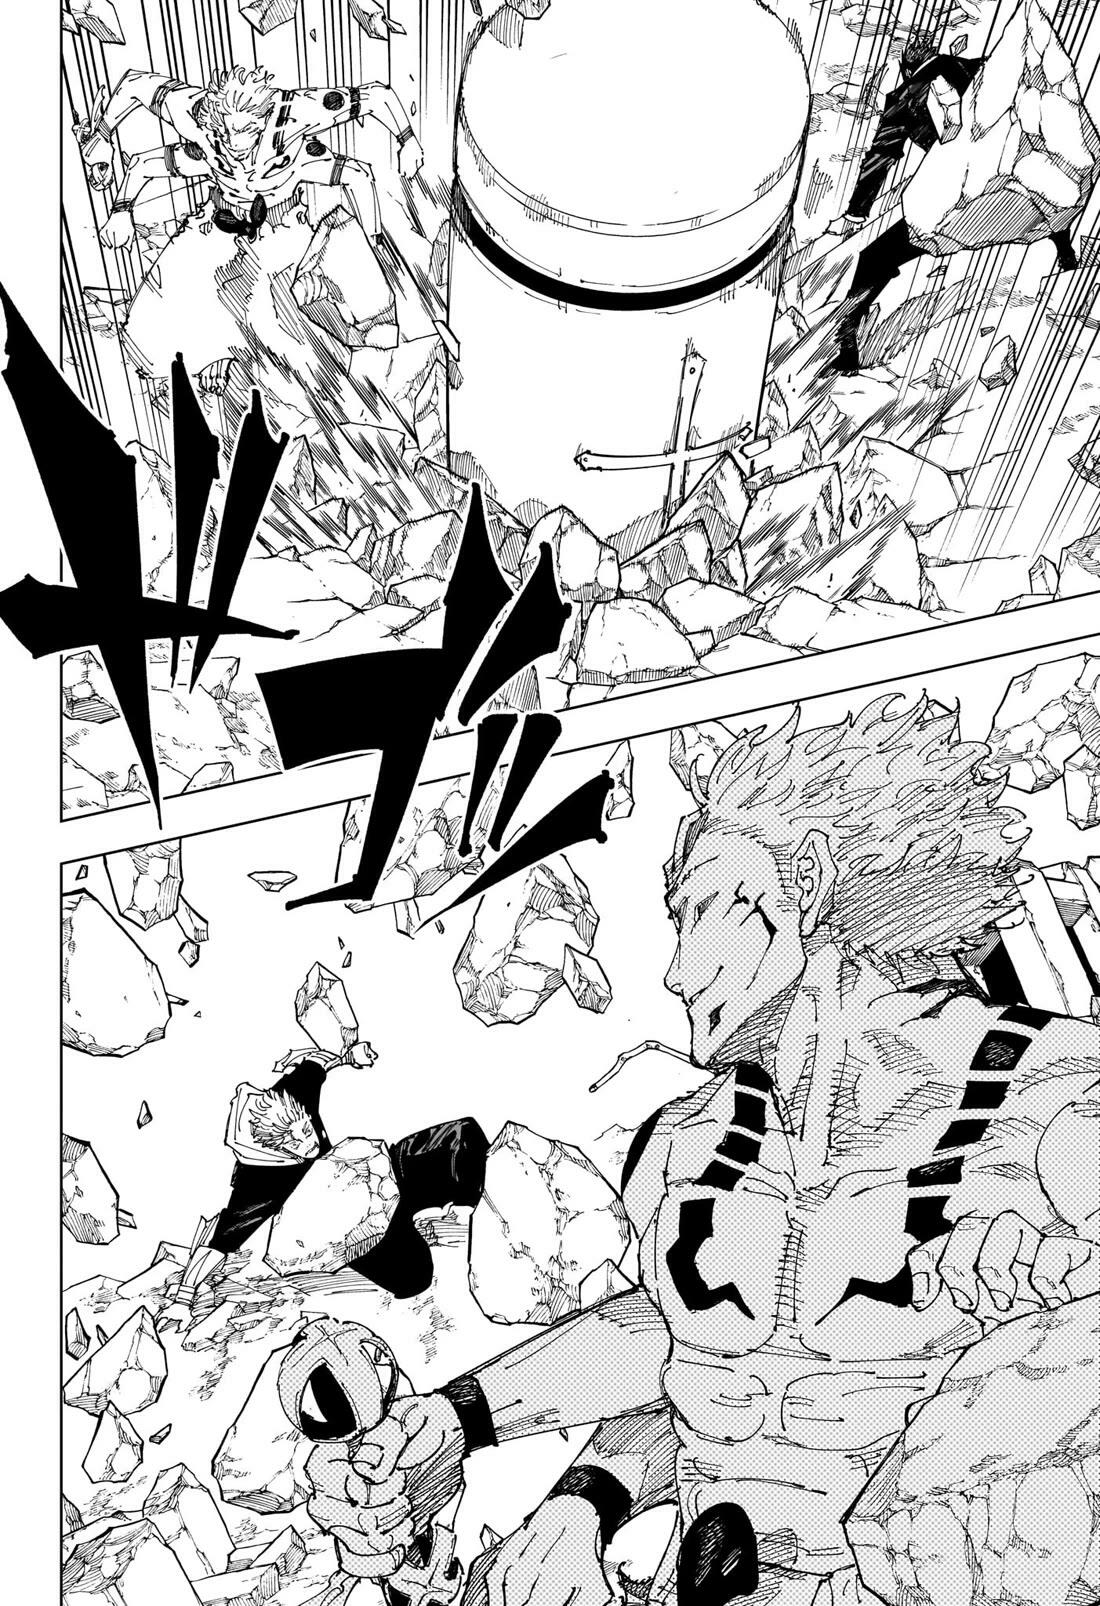 Jujutsu Kaisen Chapter 244: The Decisive Battle In The Uninhabited, Demon-Infested Shinjuku ⑯ page 15 - Mangakakalot